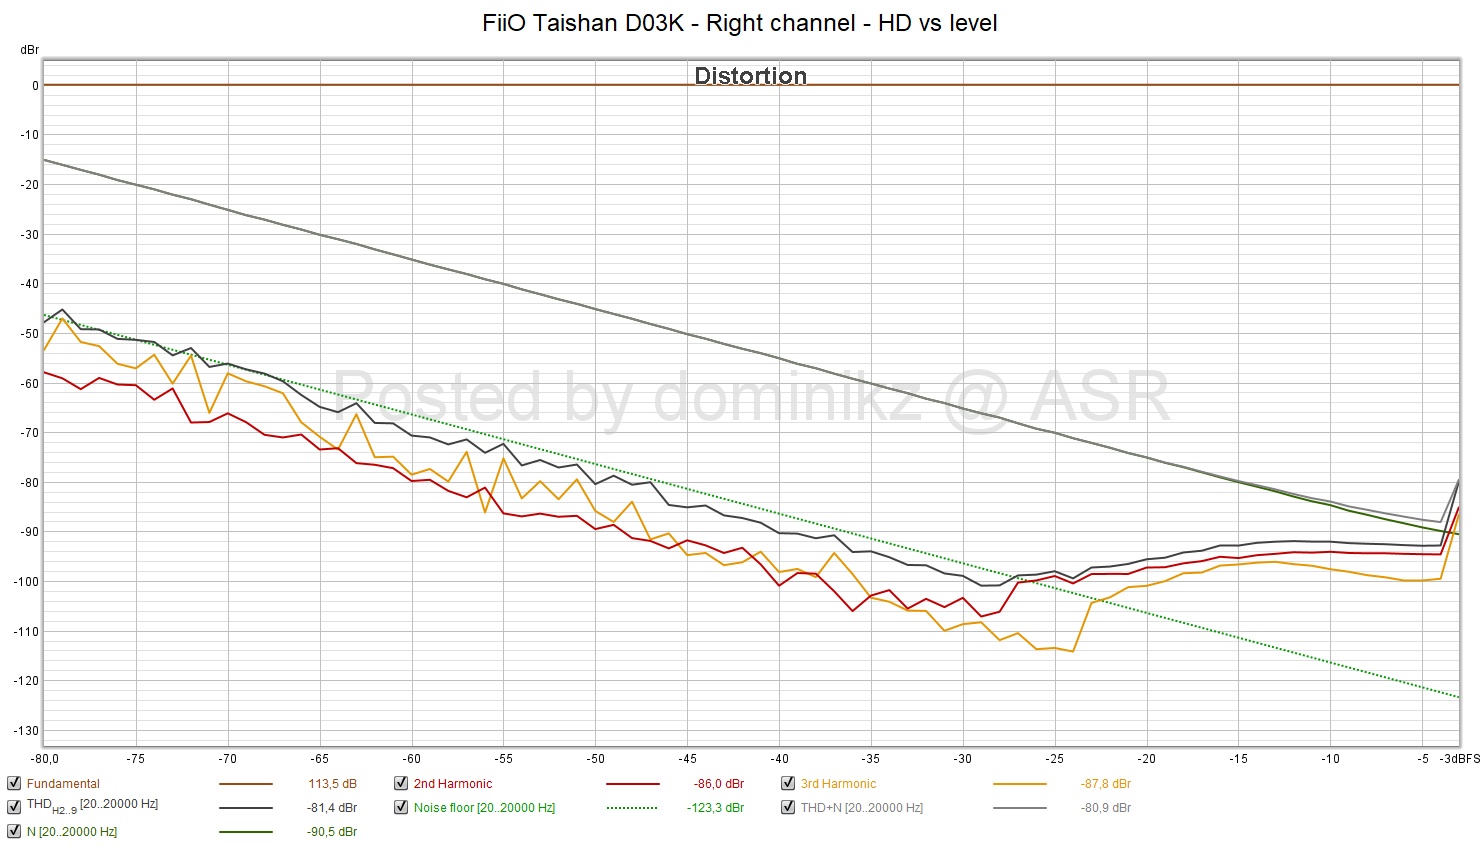 FiiO Taishan D03K - Right channel - HD vs level.jpg